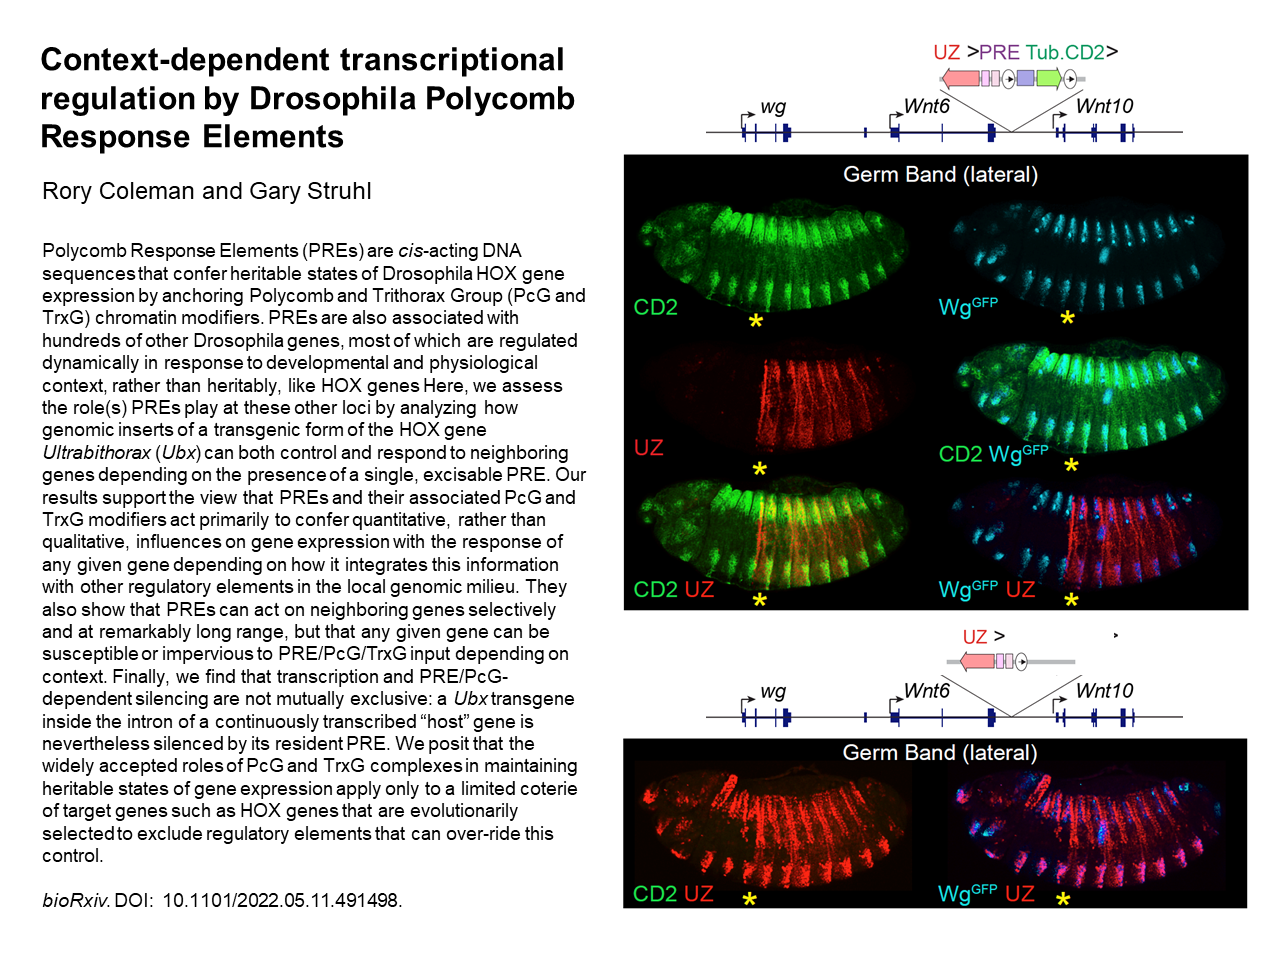 Context-dependent transcriptional regulation by Drosophila Polycomb Response Elements